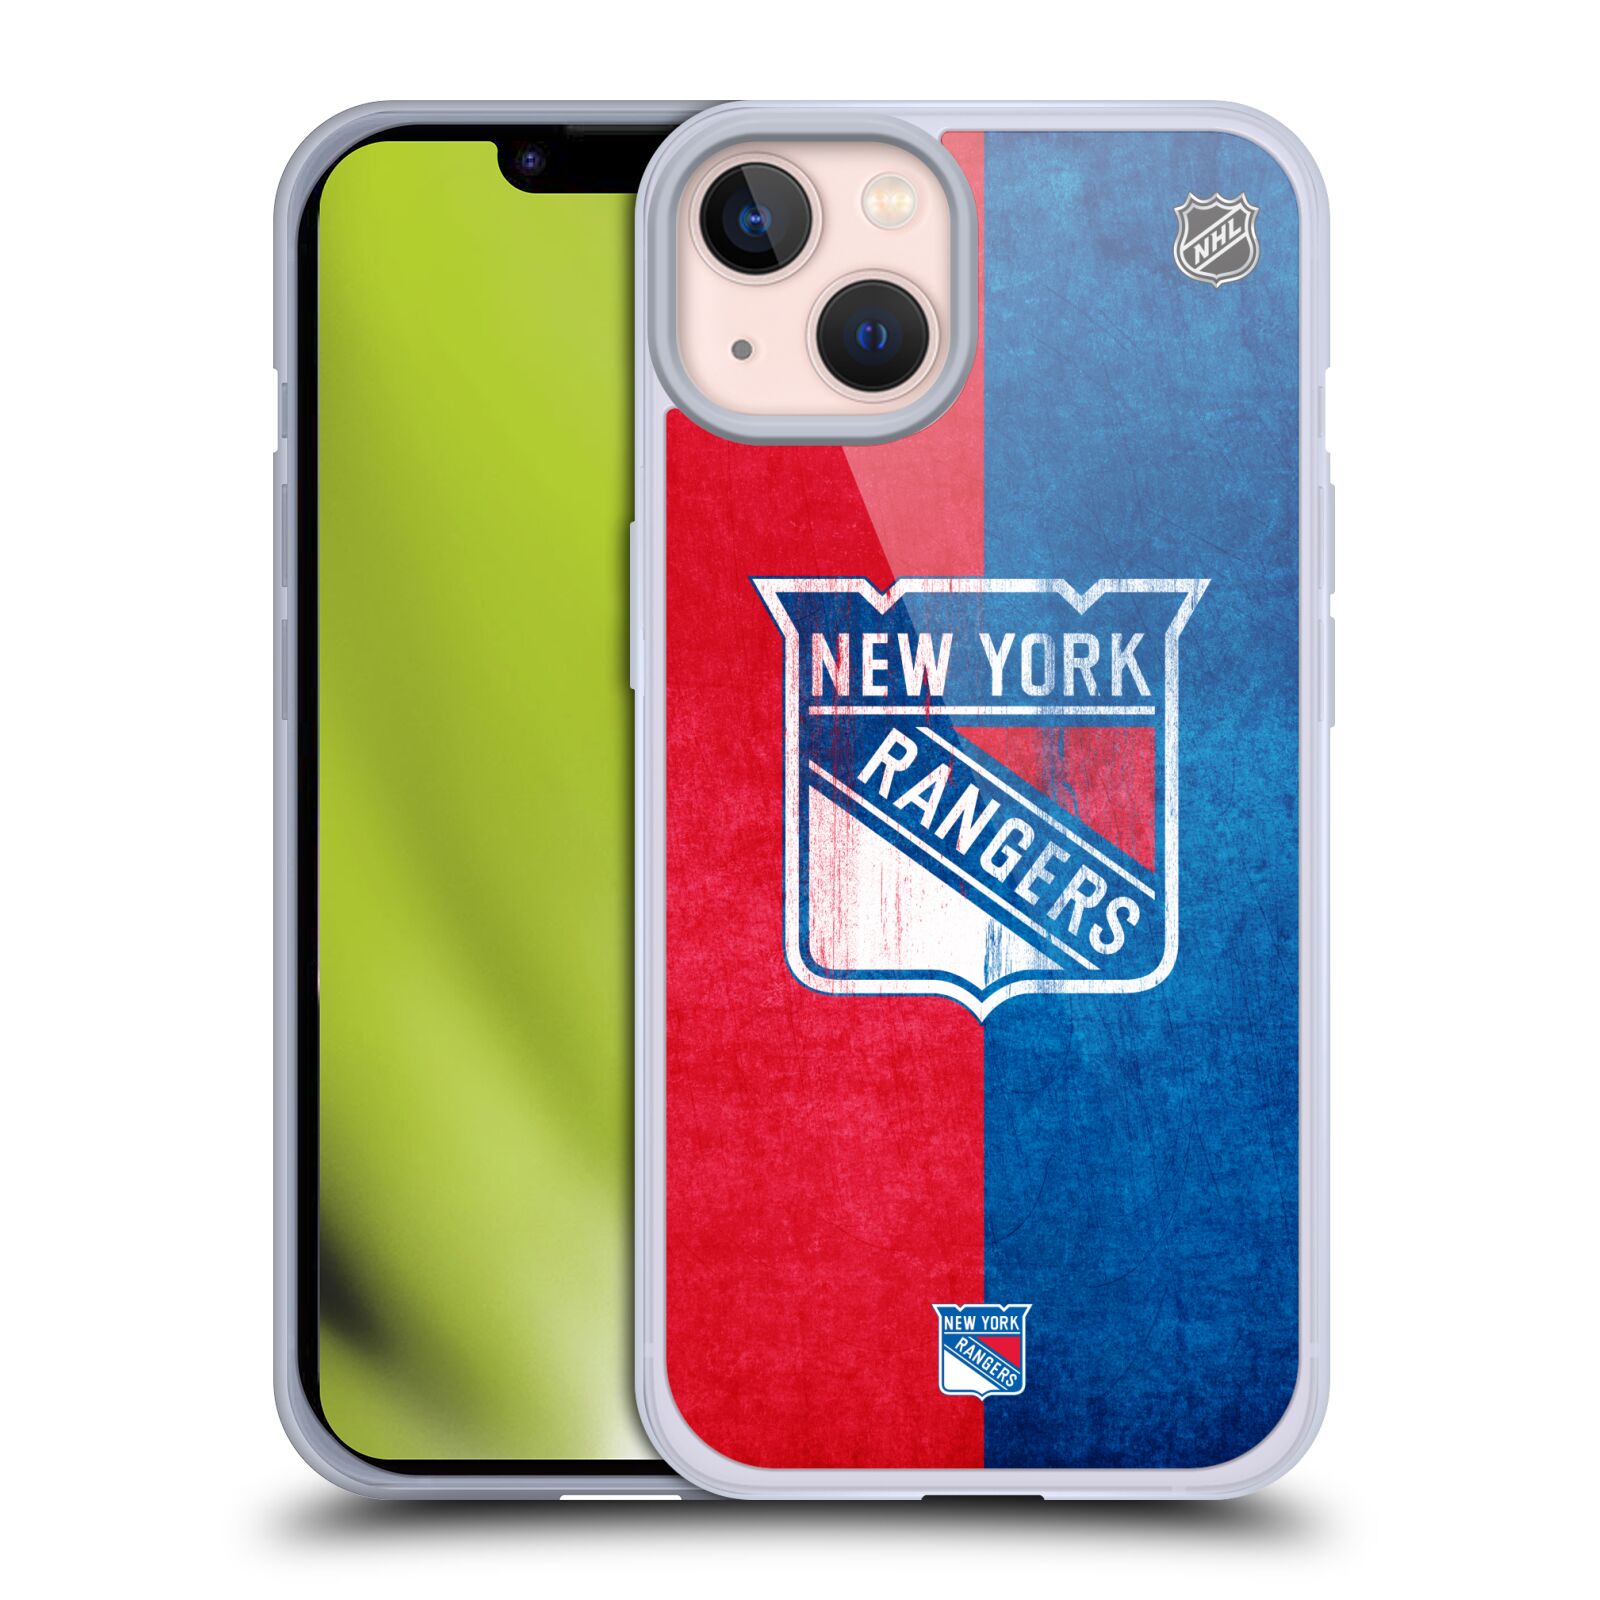 Silikonové pouzdro na mobil Apple iPhone 13 - NHL - Půlené logo New York Rangers (Silikonový kryt, obal, pouzdro na mobilní telefon Apple iPhone 13 s licencovaným motivem NHL - Půlené logo New York Rangers)